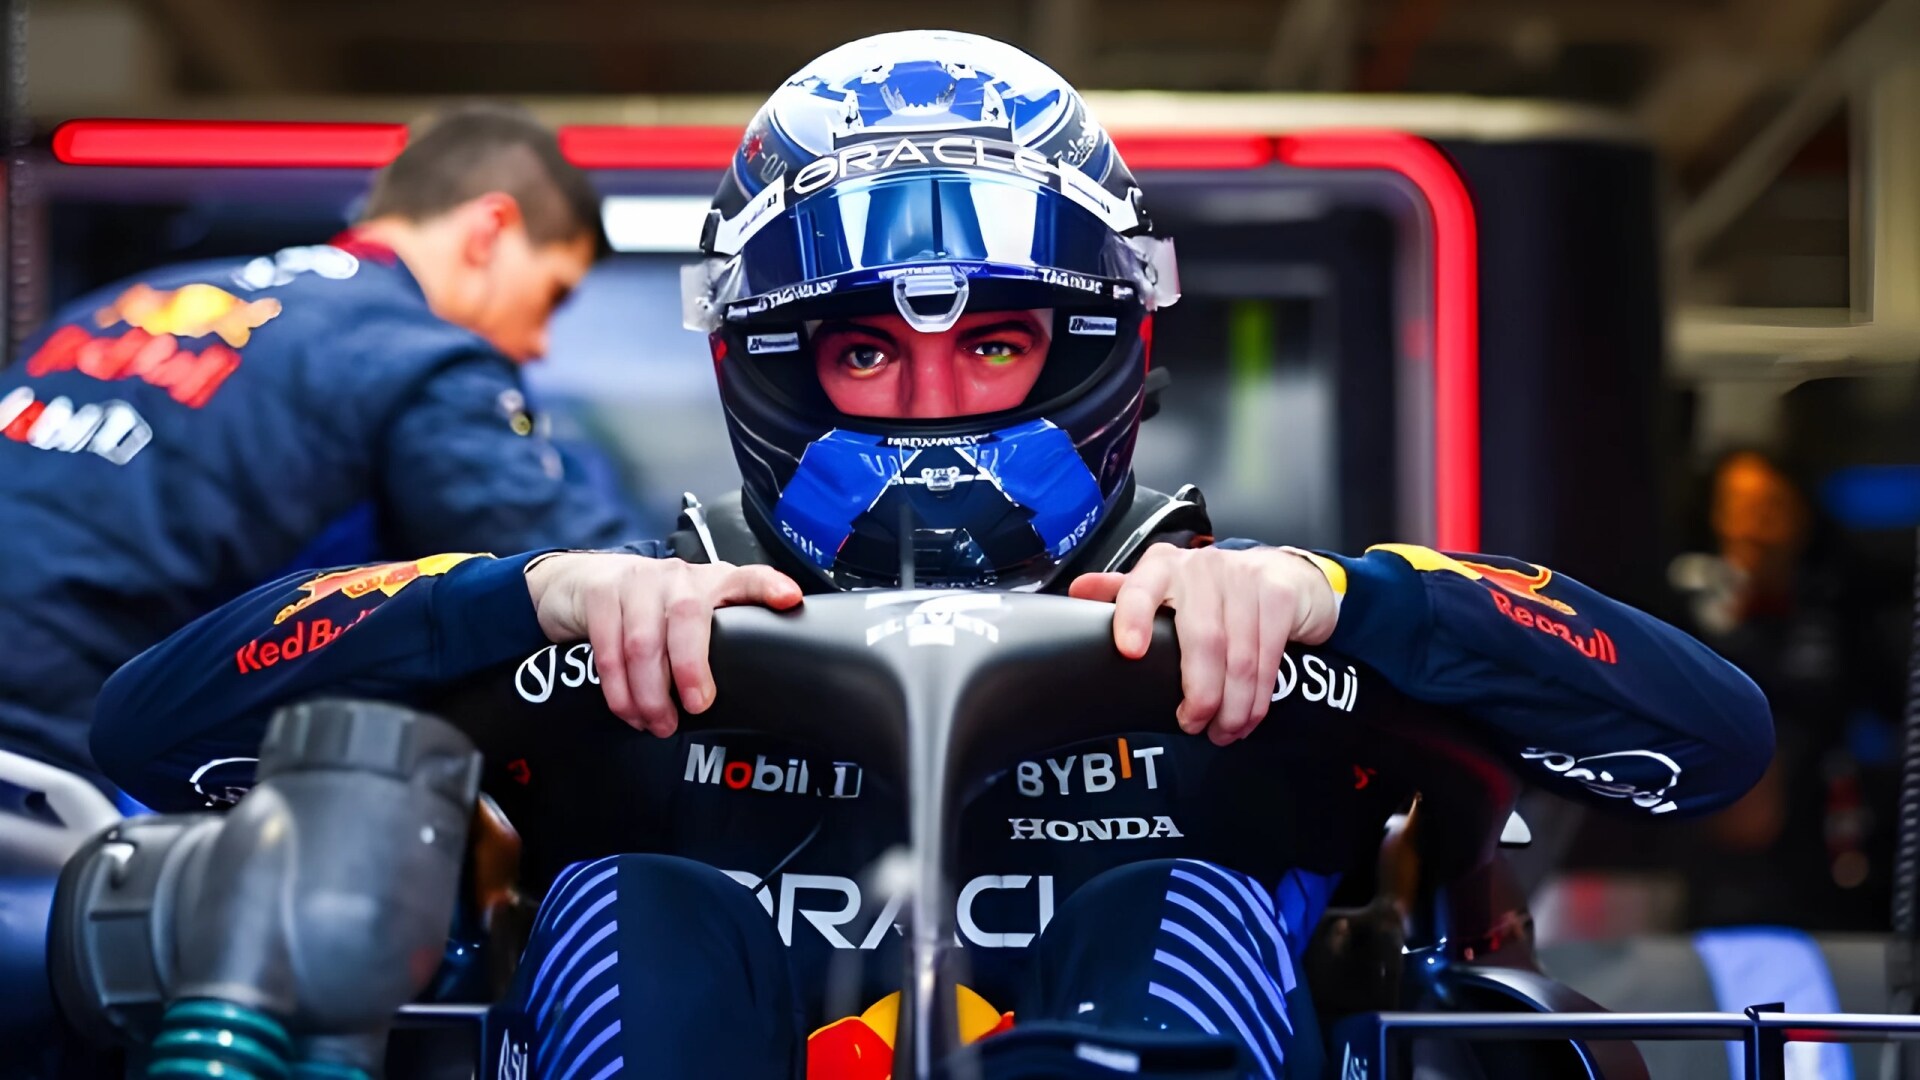 Belgian And Dutch Formula One Racer Under Red Bull Racing, Max Verstappen